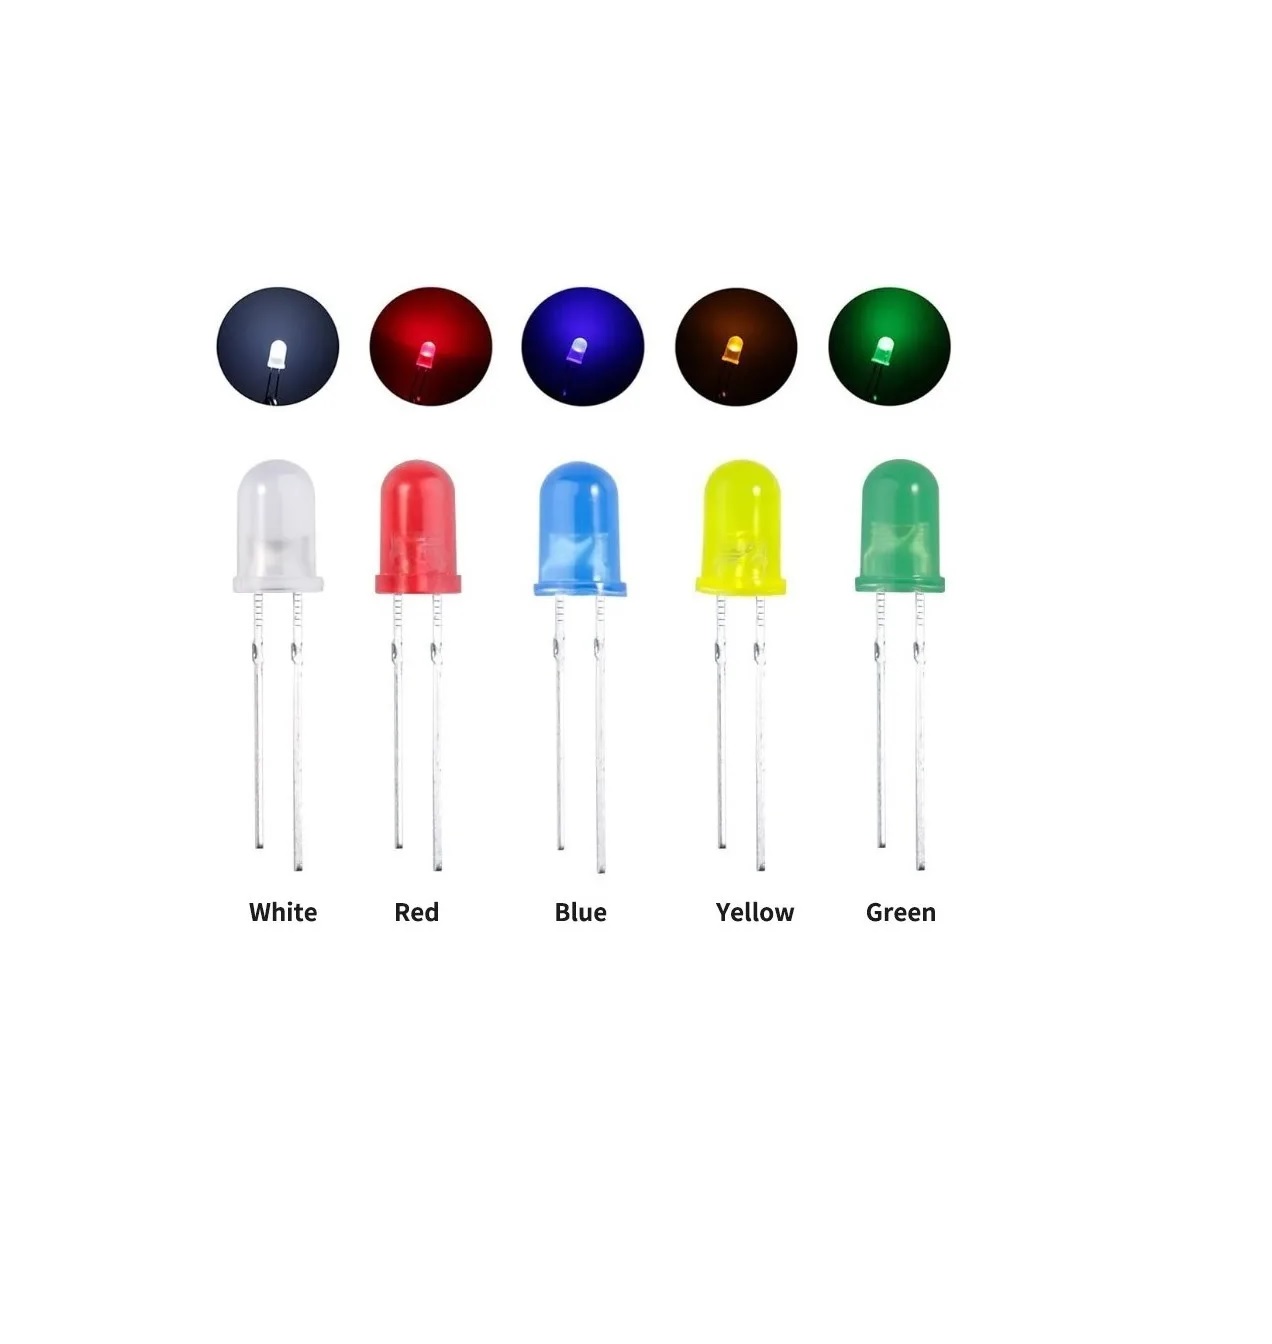 Kit Leds Ultrabrillantes De, 3 Mm 5mm, 5 Colores Disponibles